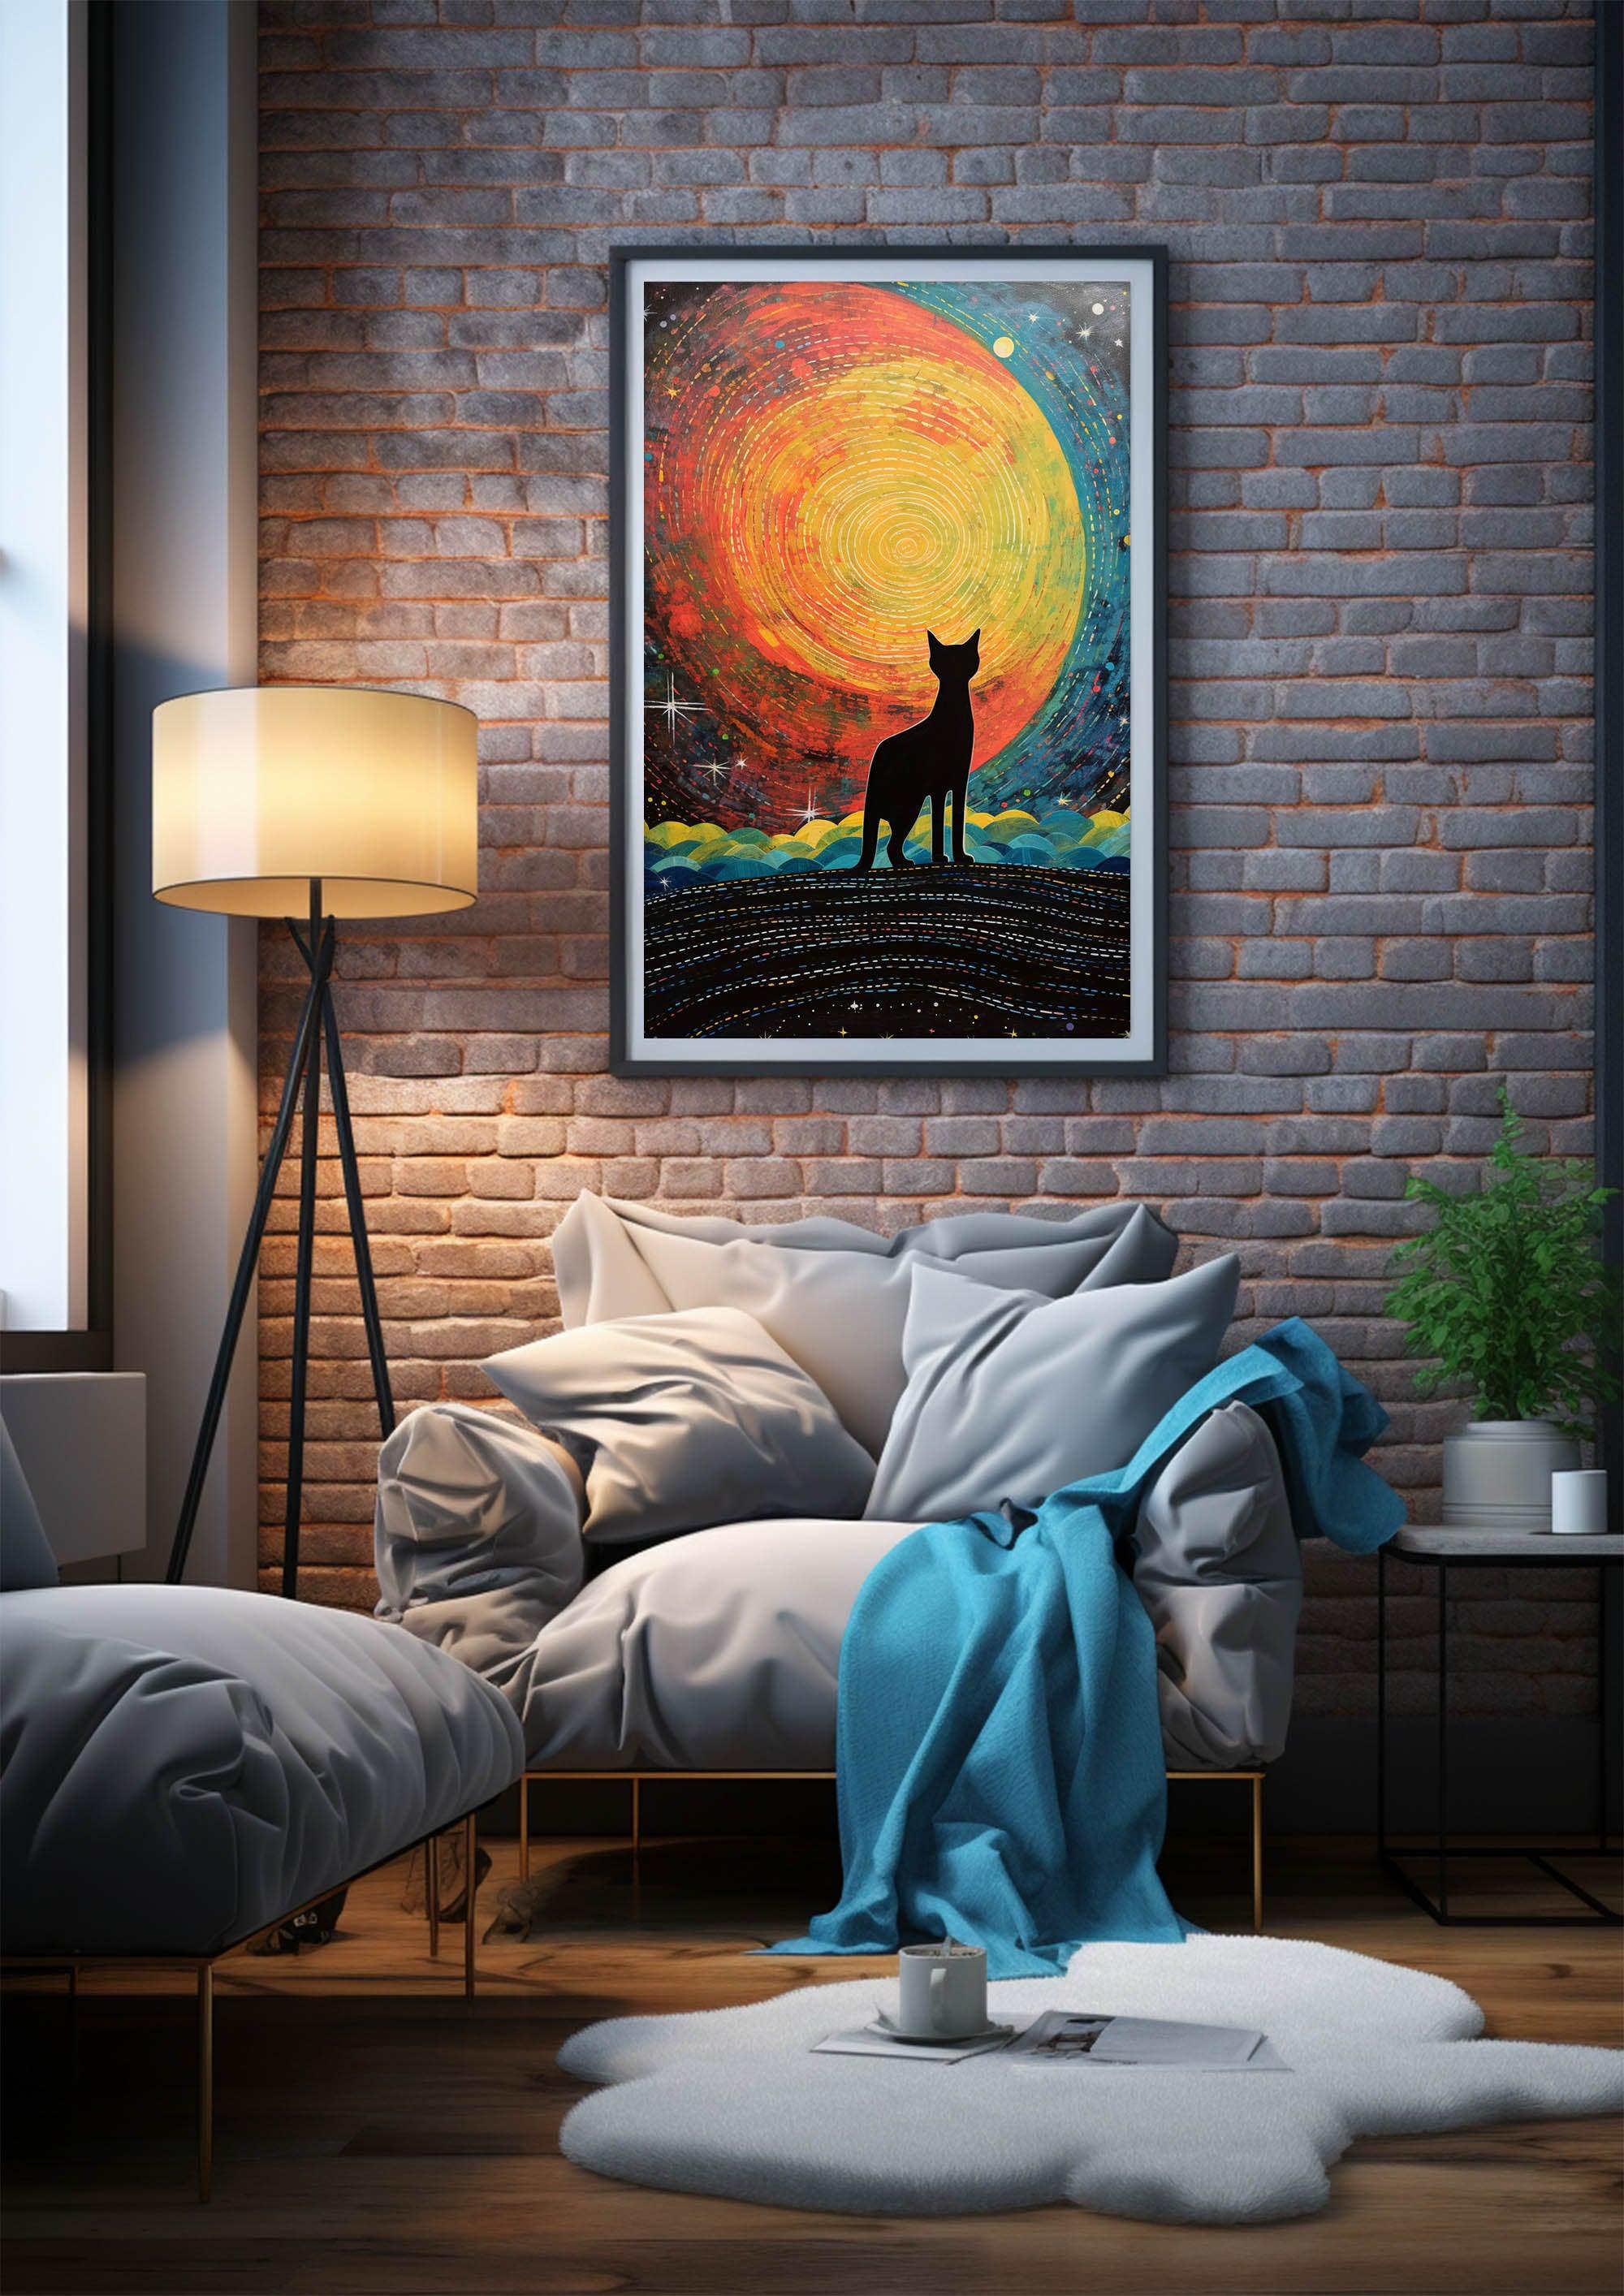 Cat Illustration | Starry Sky Wall Art Decor |Wall Art Print |Van Gogh style|Bedroom Livingroom,Kidsroom|PRINTABLE Art |Digital Download